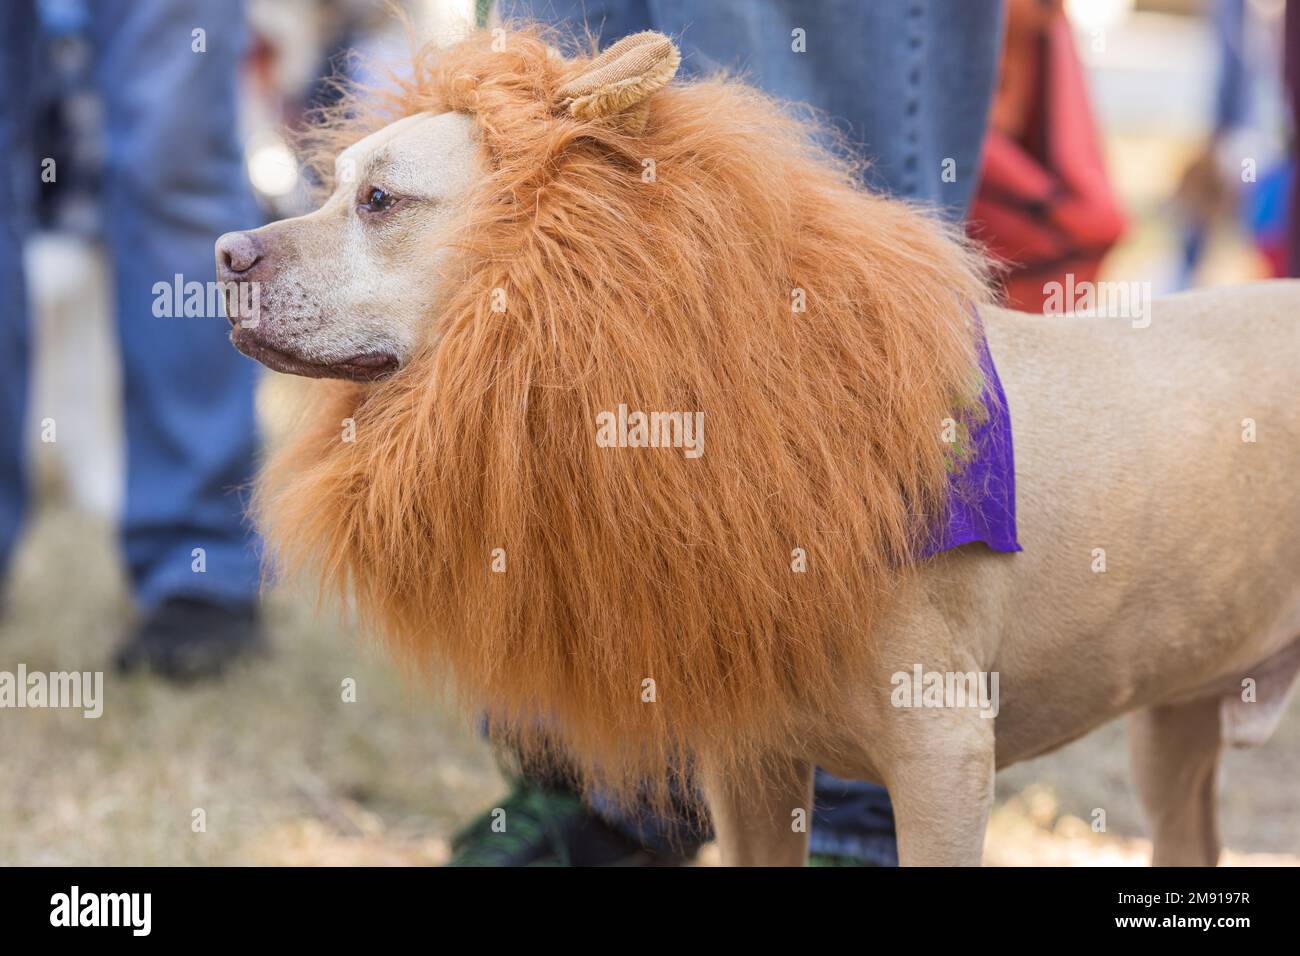 Perro con melena de león fotografías e imágenes de alta resolución - Alamy